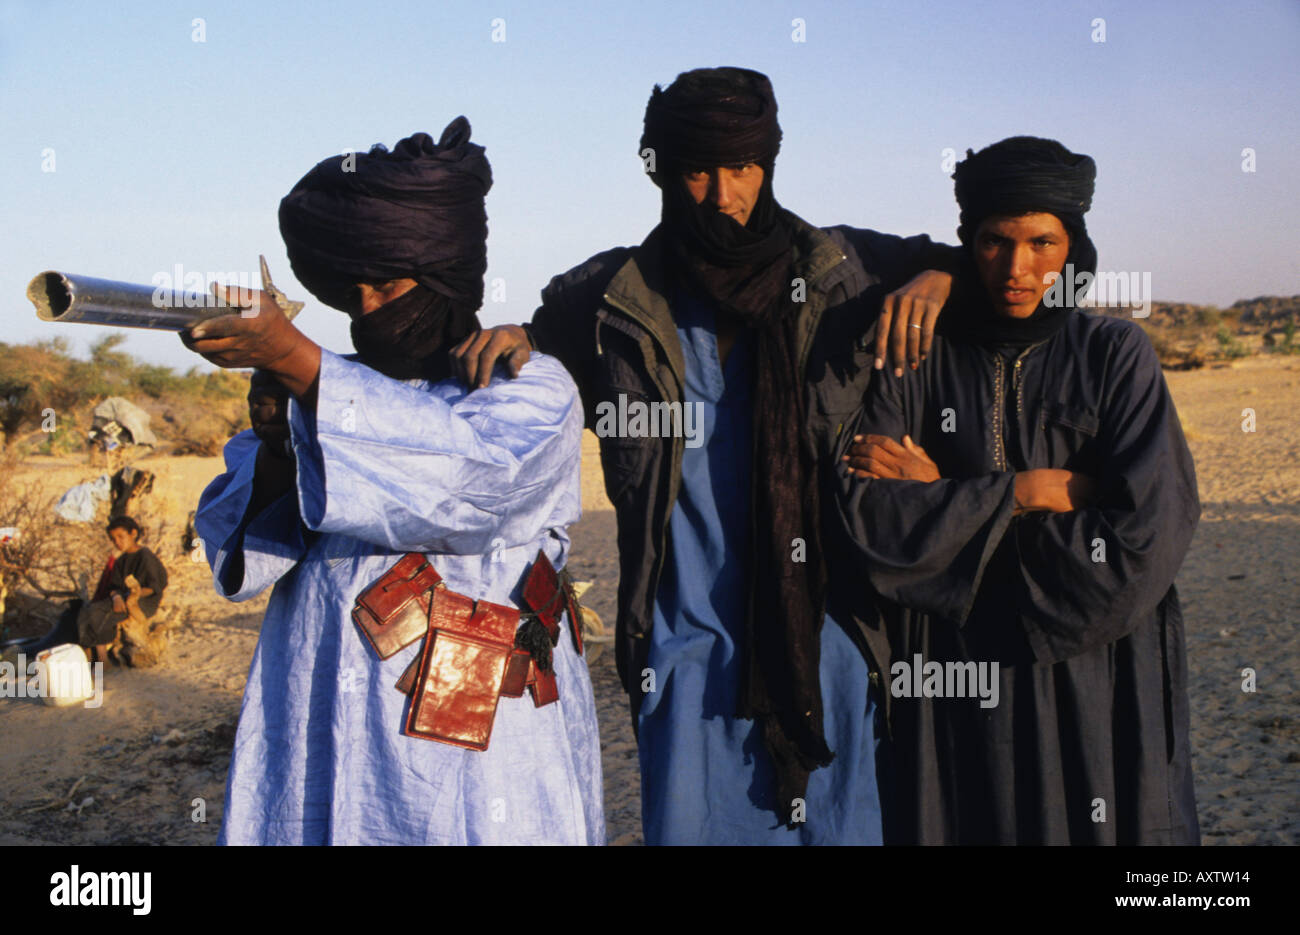 tuareg-nomads-with-home-made-gun-in-desert-camp-anhar-northern-mali-AXTW14.jpg